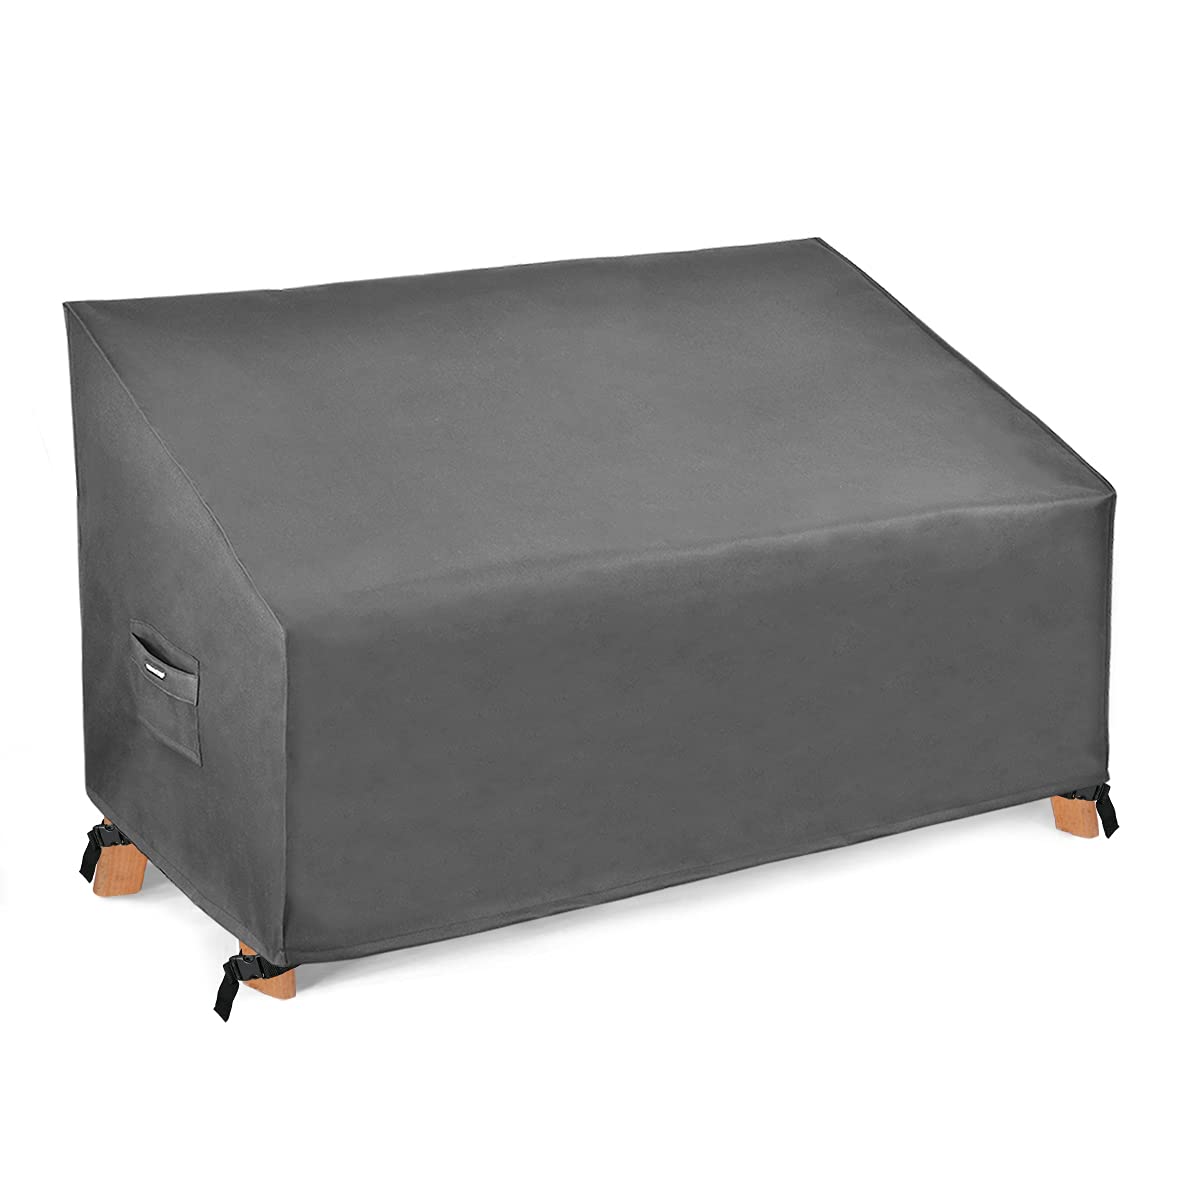 Patio watcher outdoor furniture sofa cover